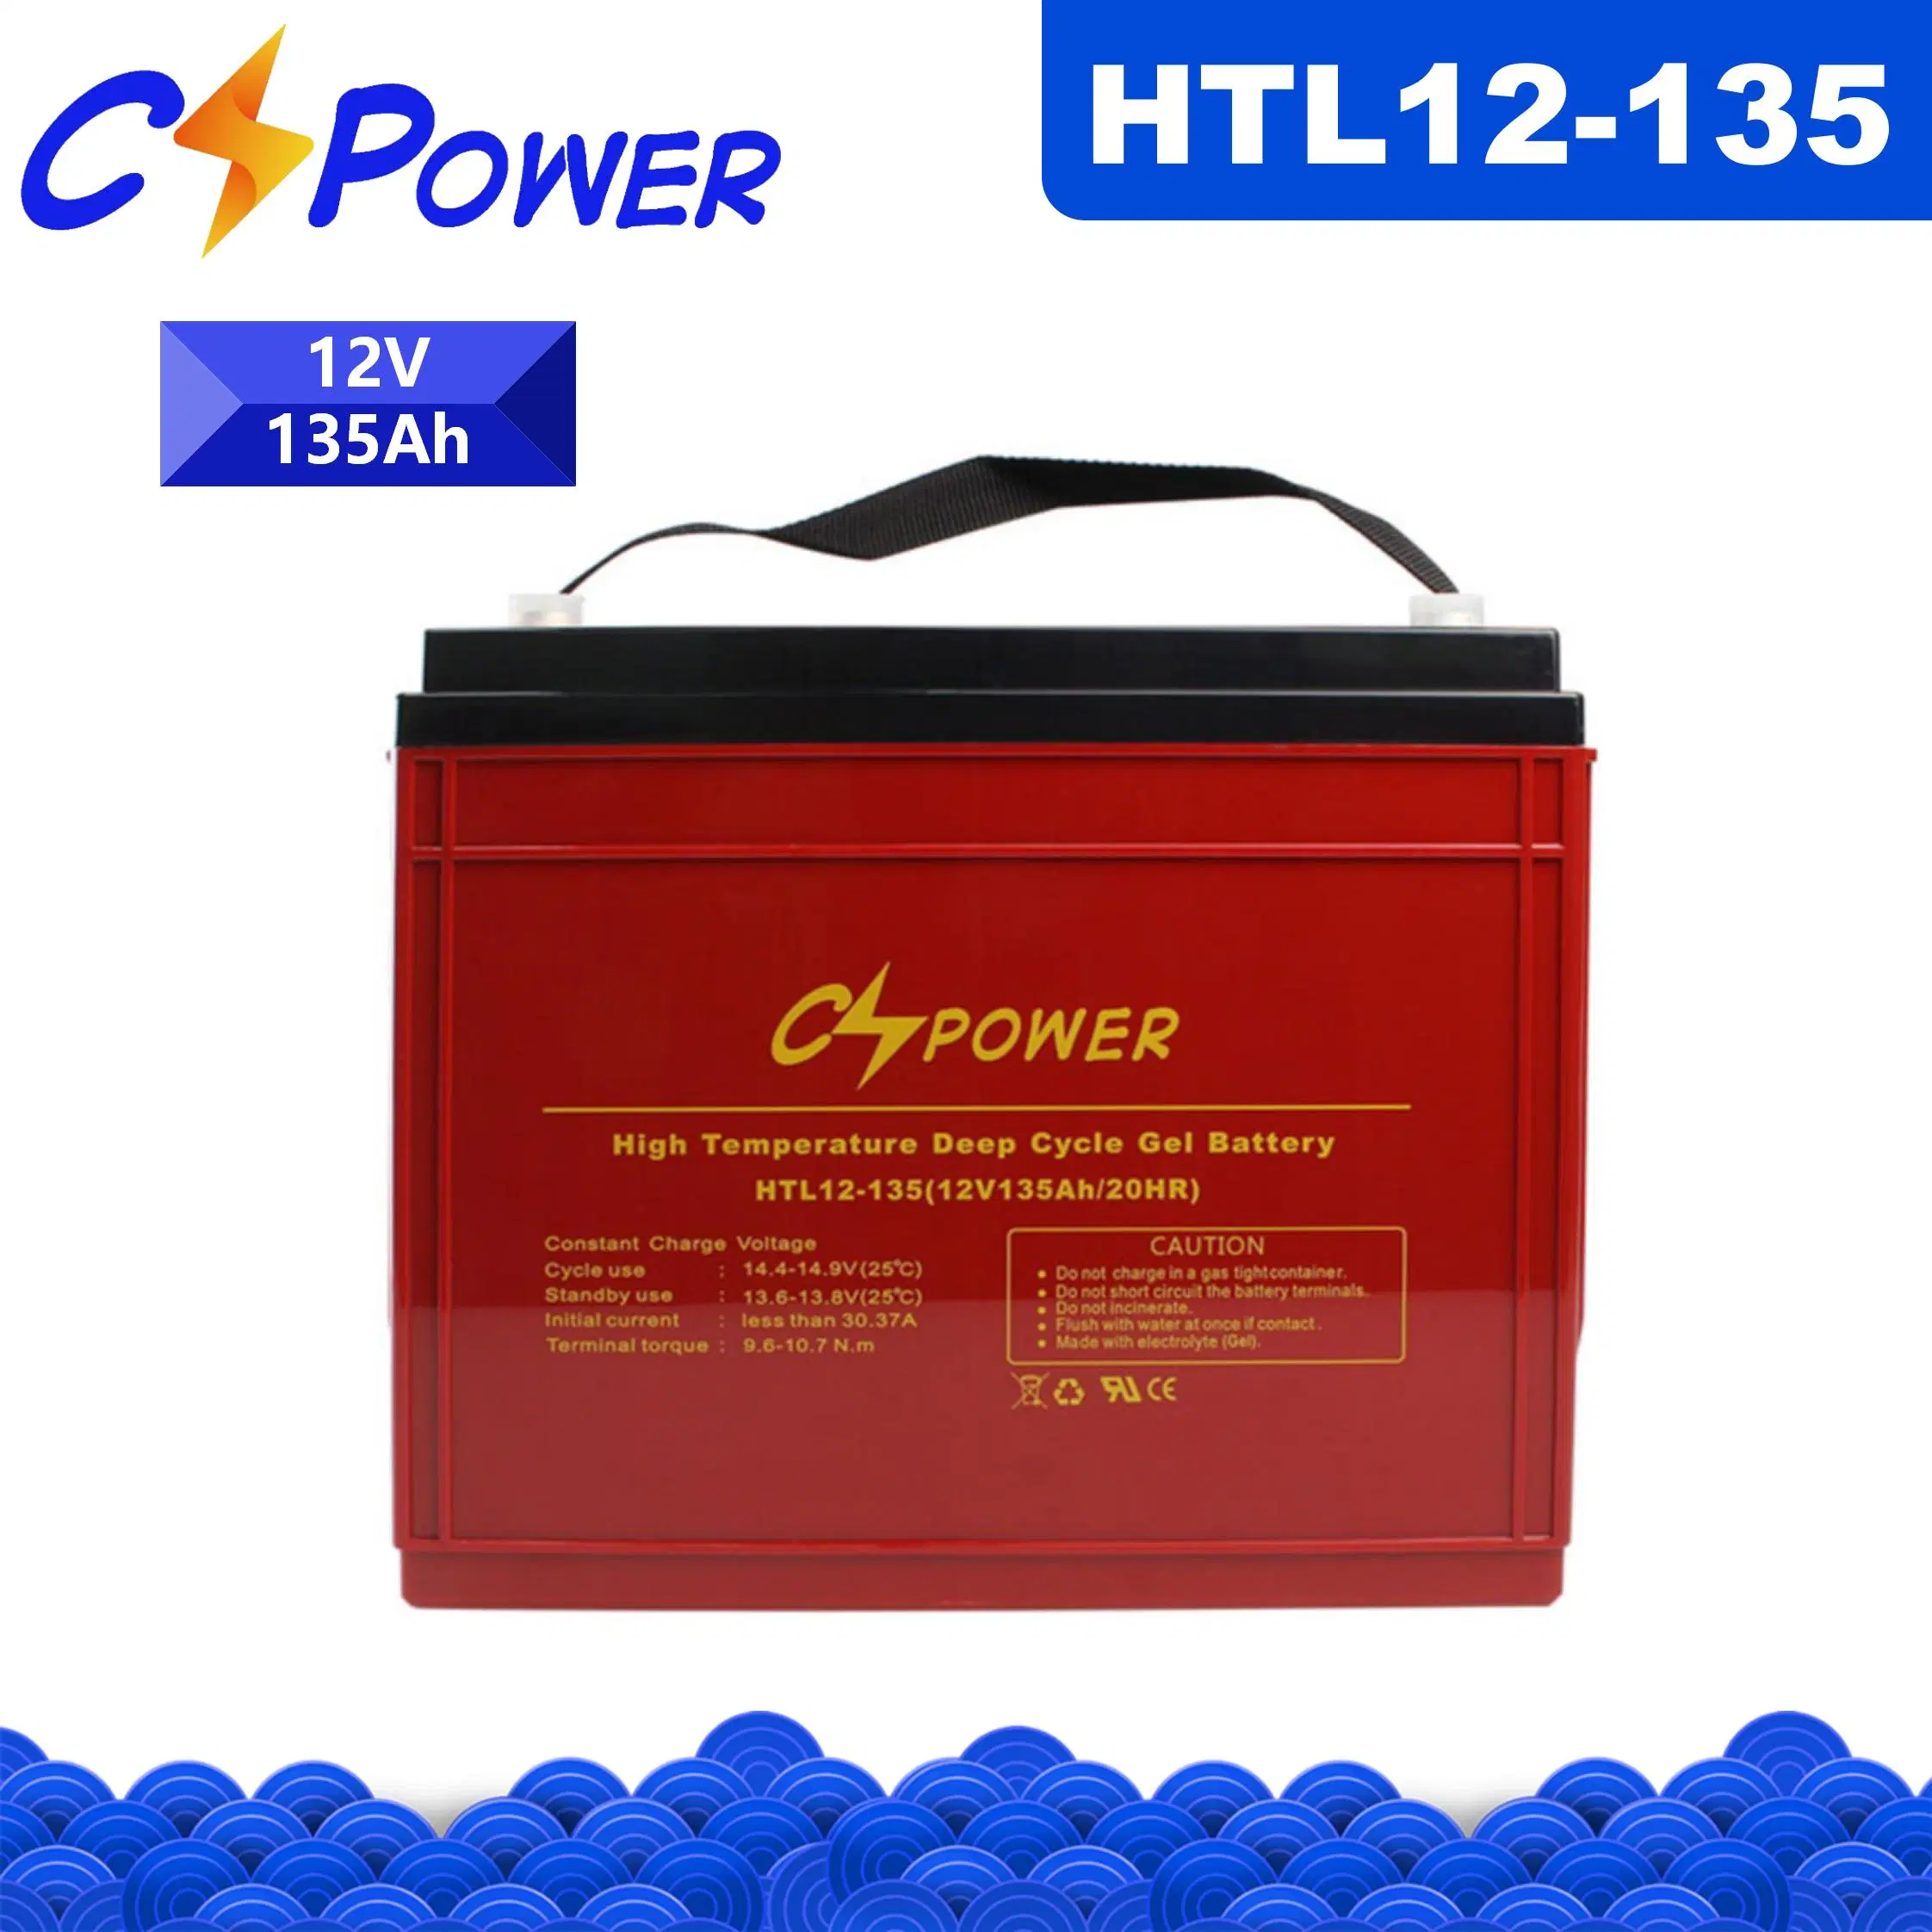 Cspower Sealed Lead Acid Battery12V 135ah Long Life Gel Battery - UPS Computer Backup